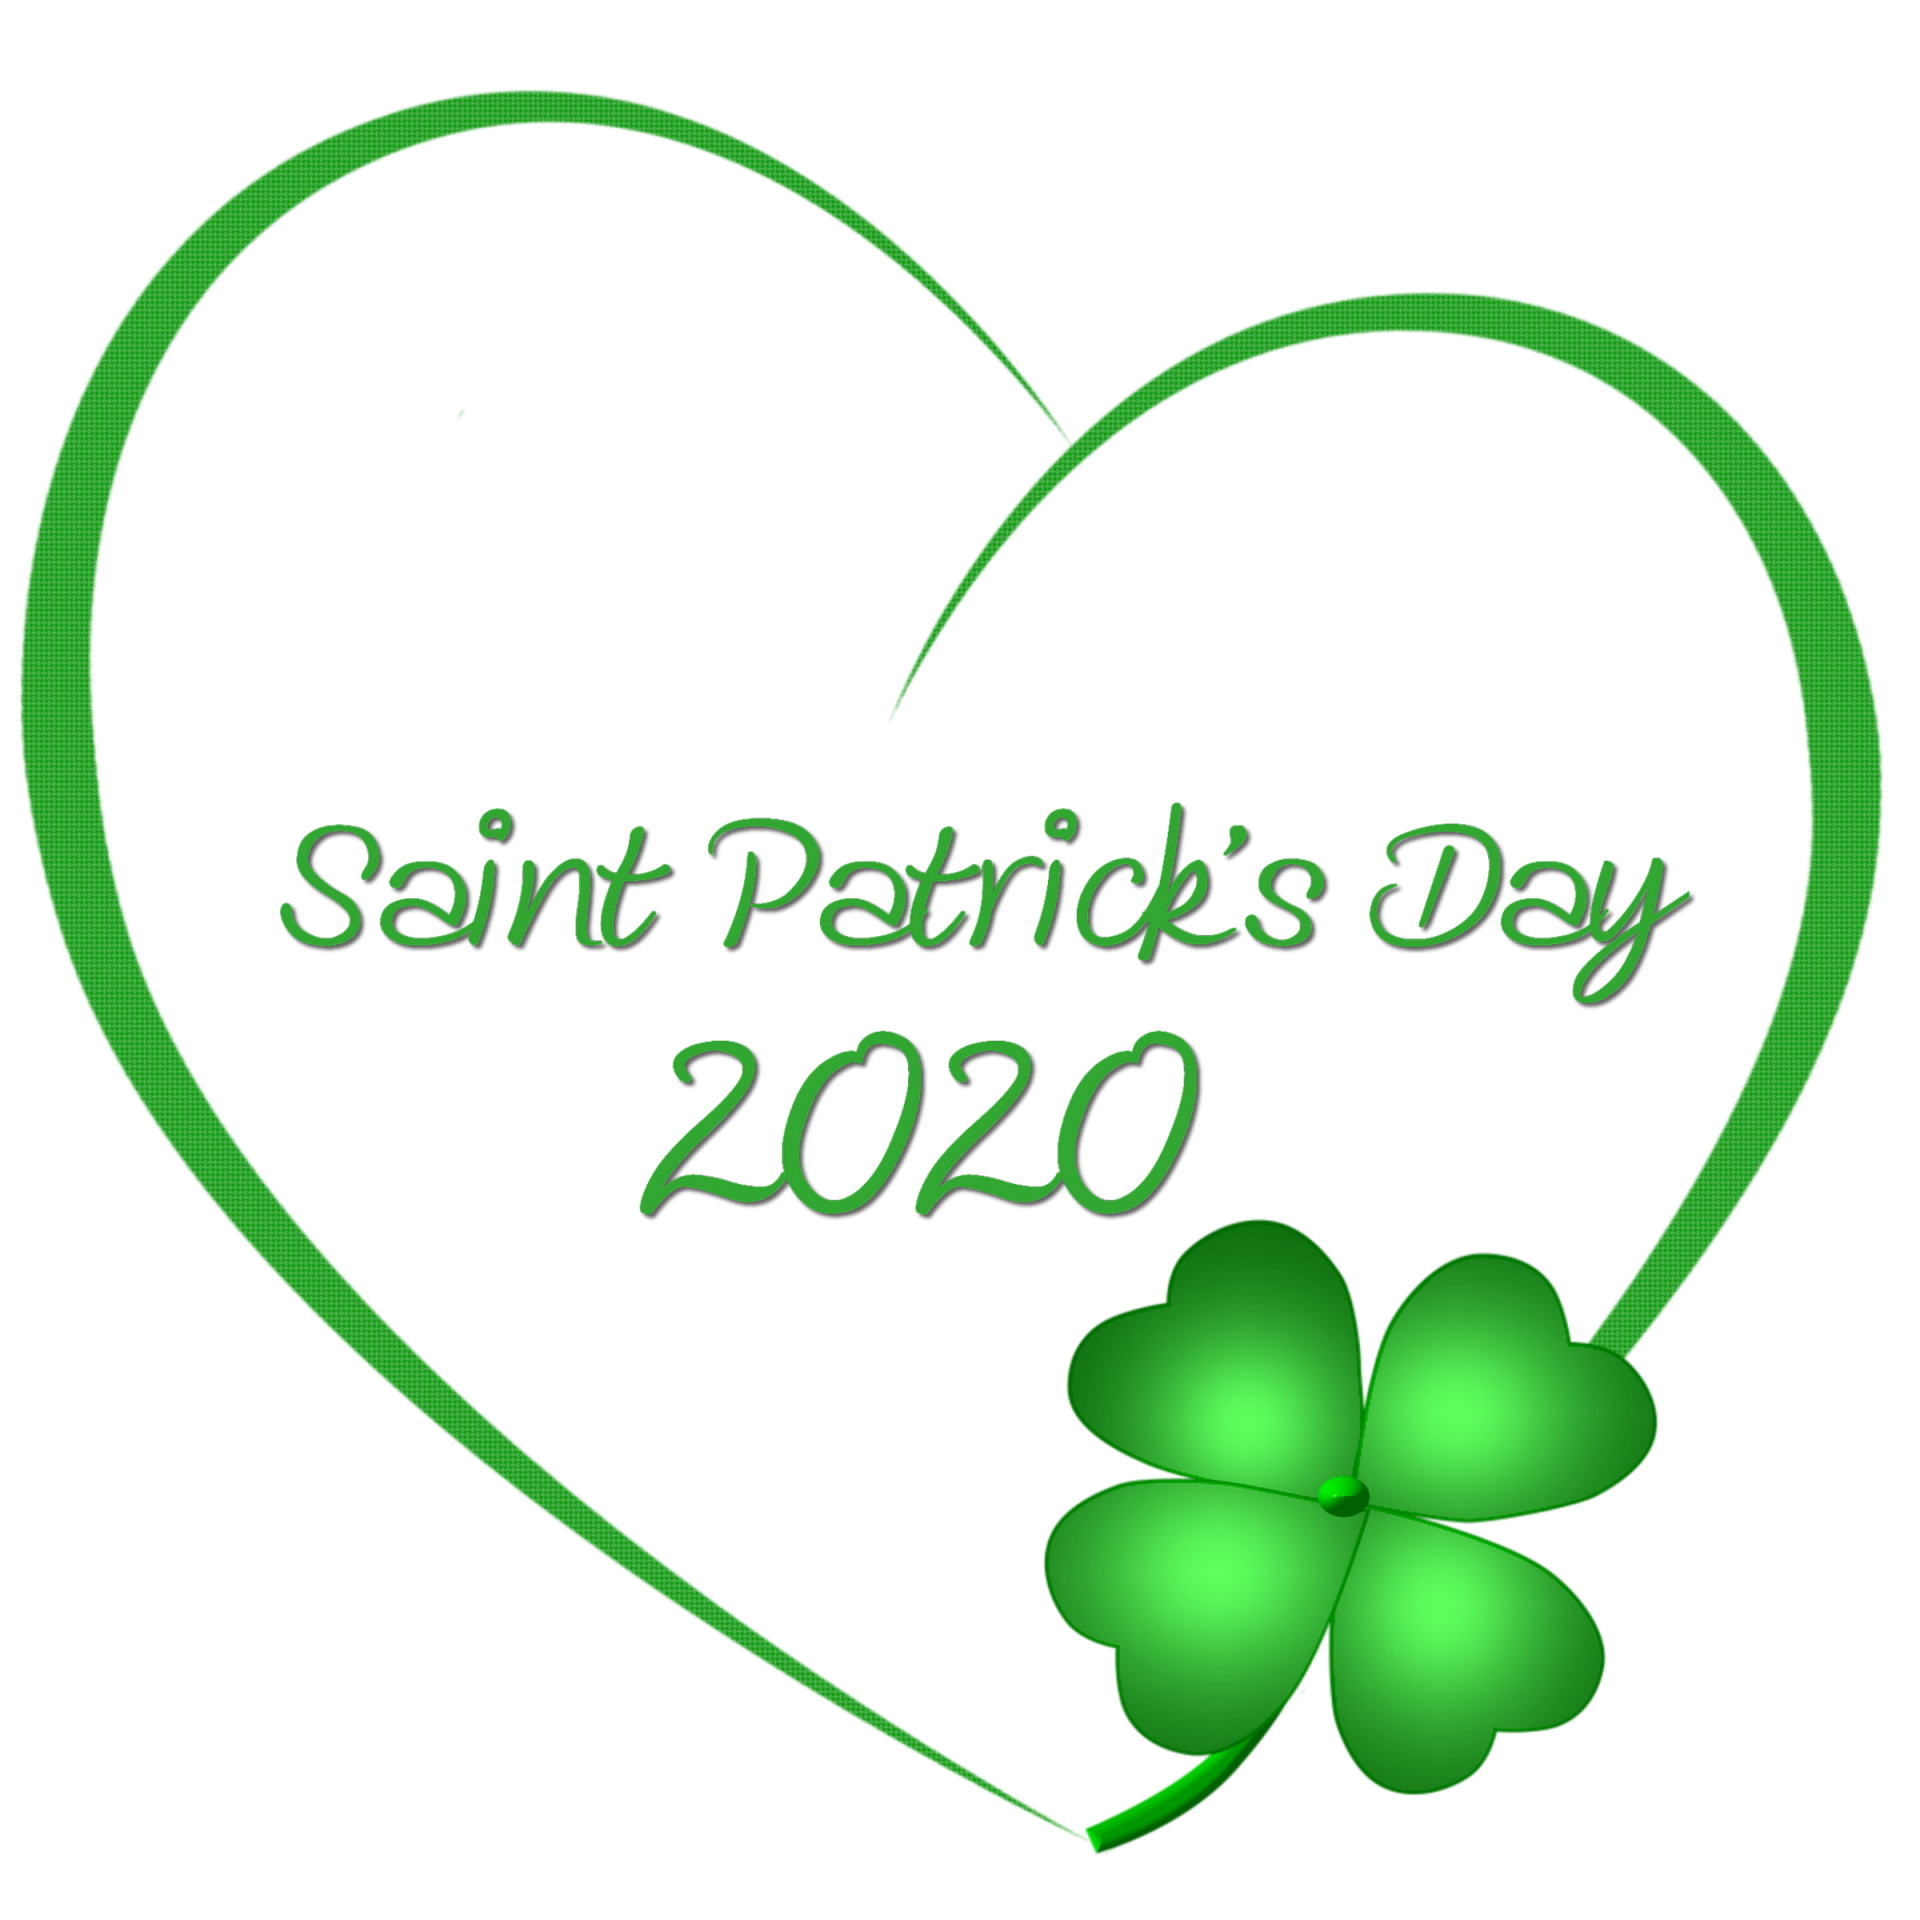 Saint Patrick's Day 2020 - 1